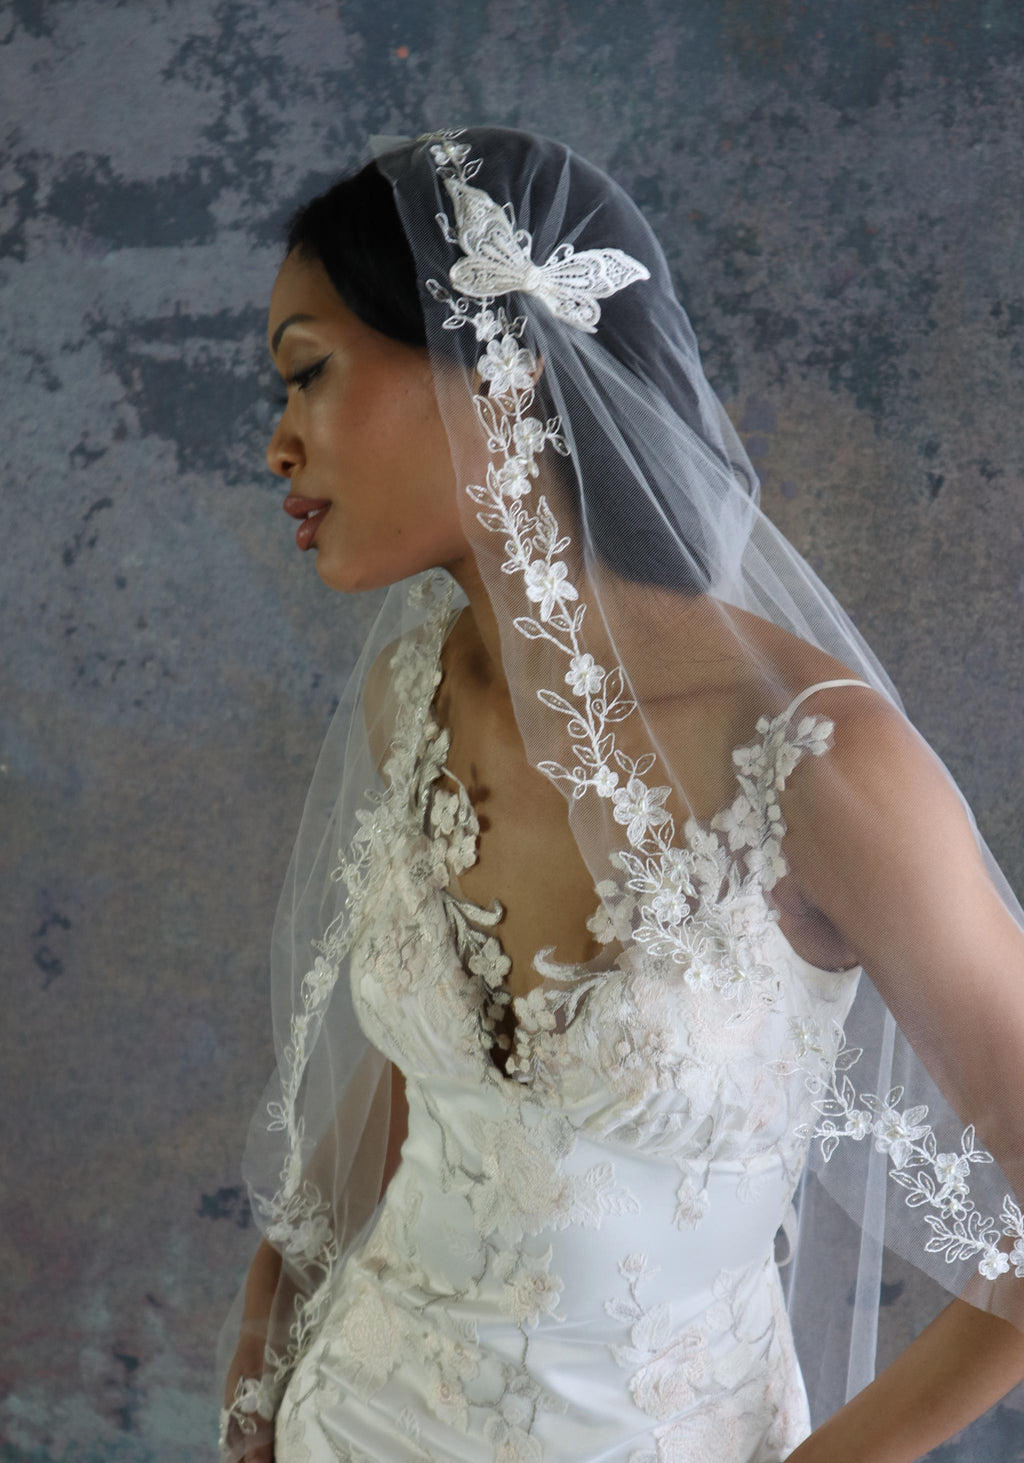 Vintage inspired cathedral length bridal veil